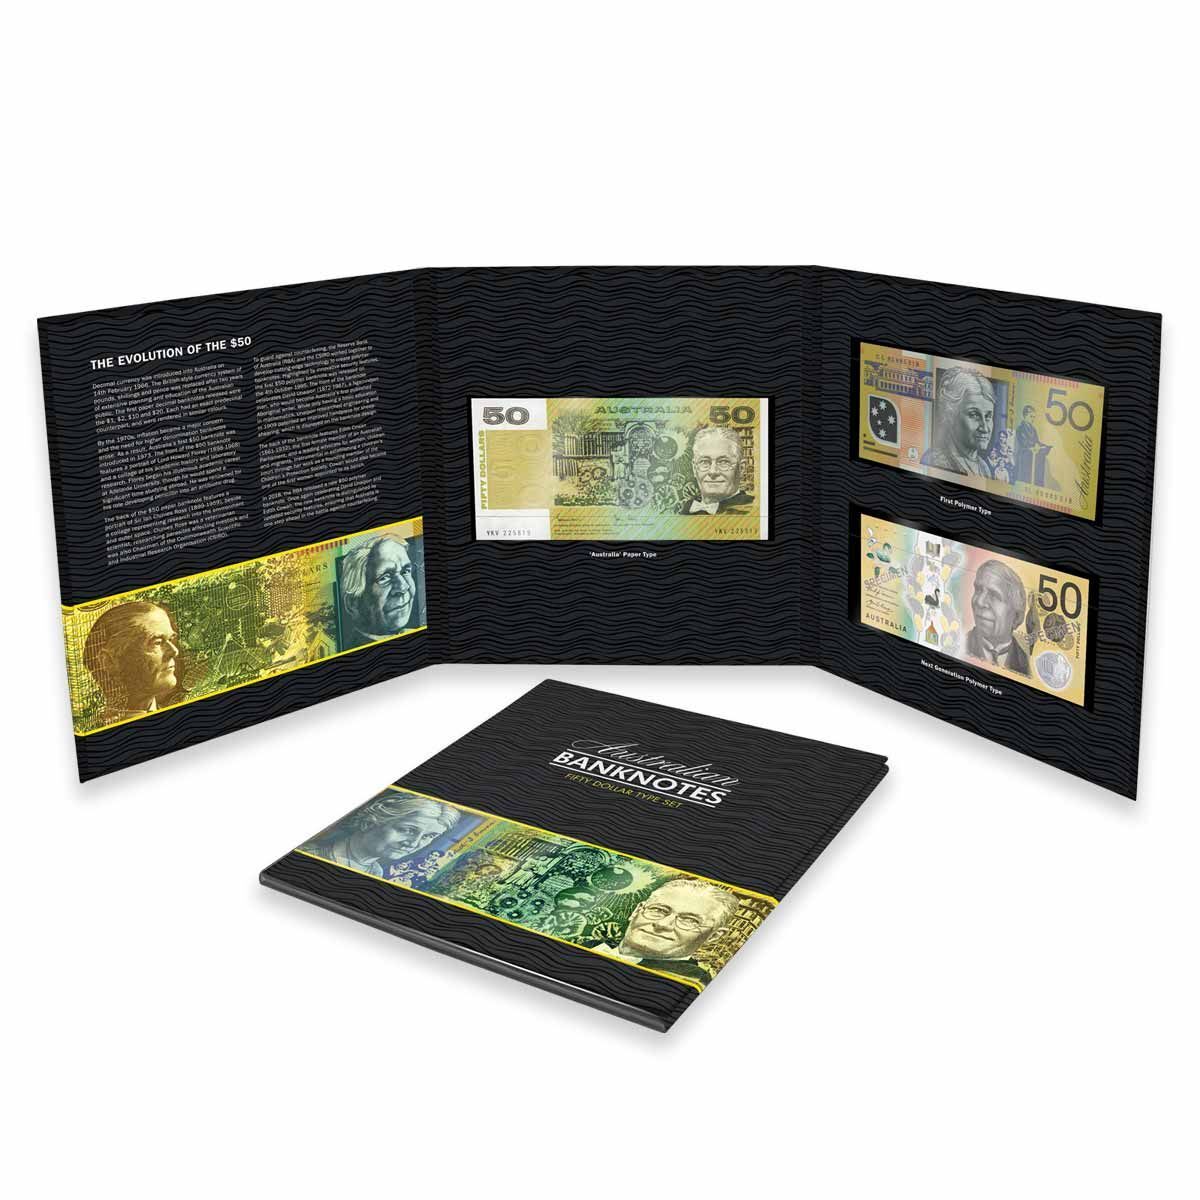 Australian $50 Banknote Type Set